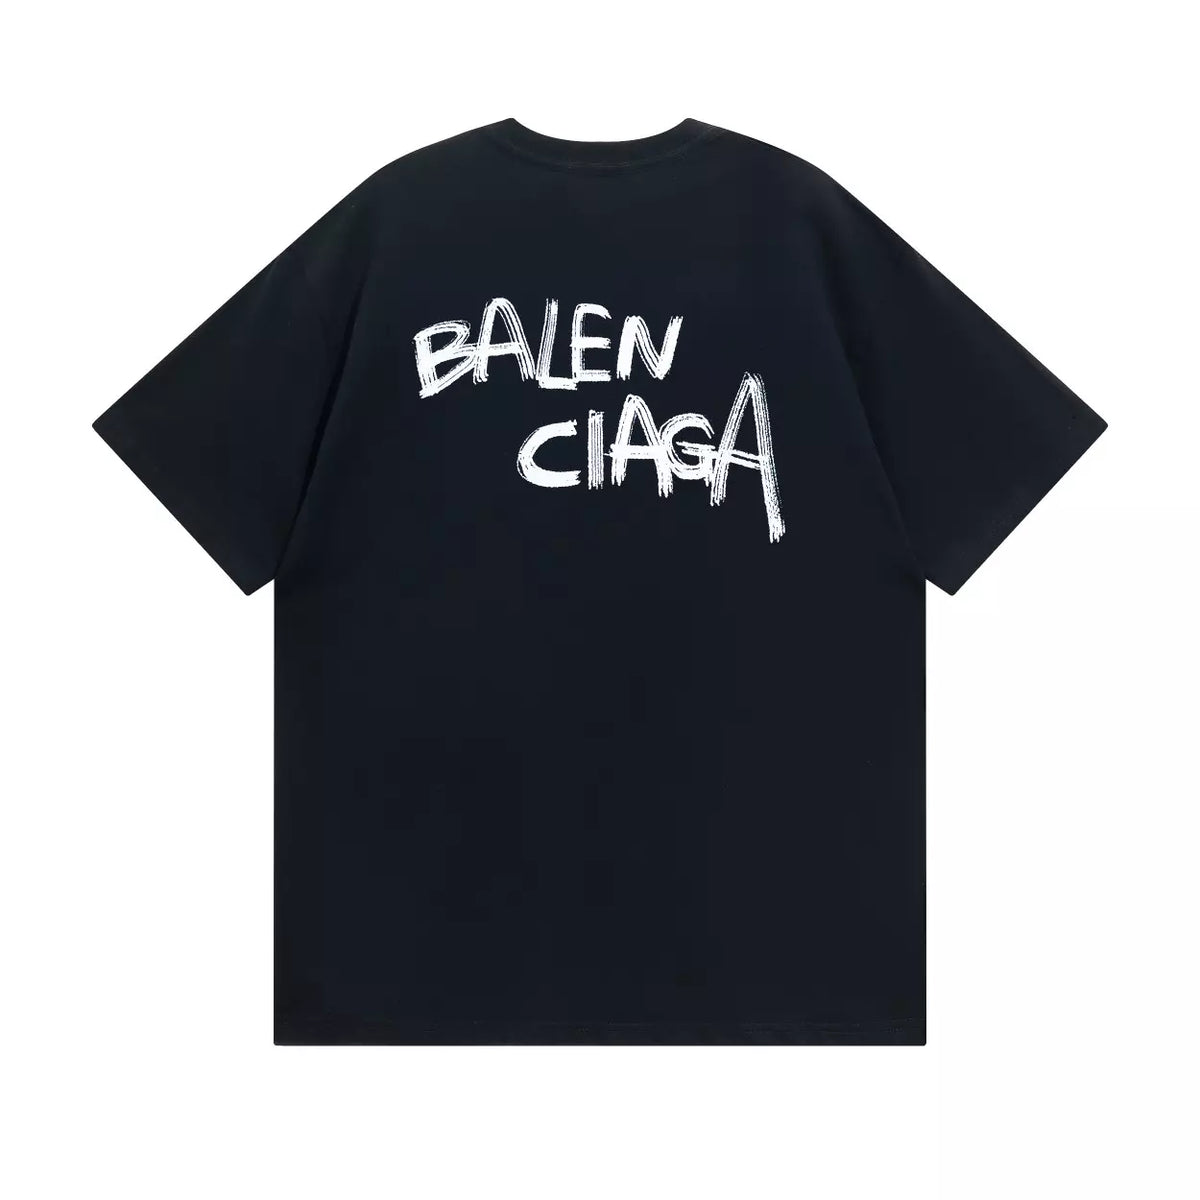 Camiseta Balenciaga Street Wear Black